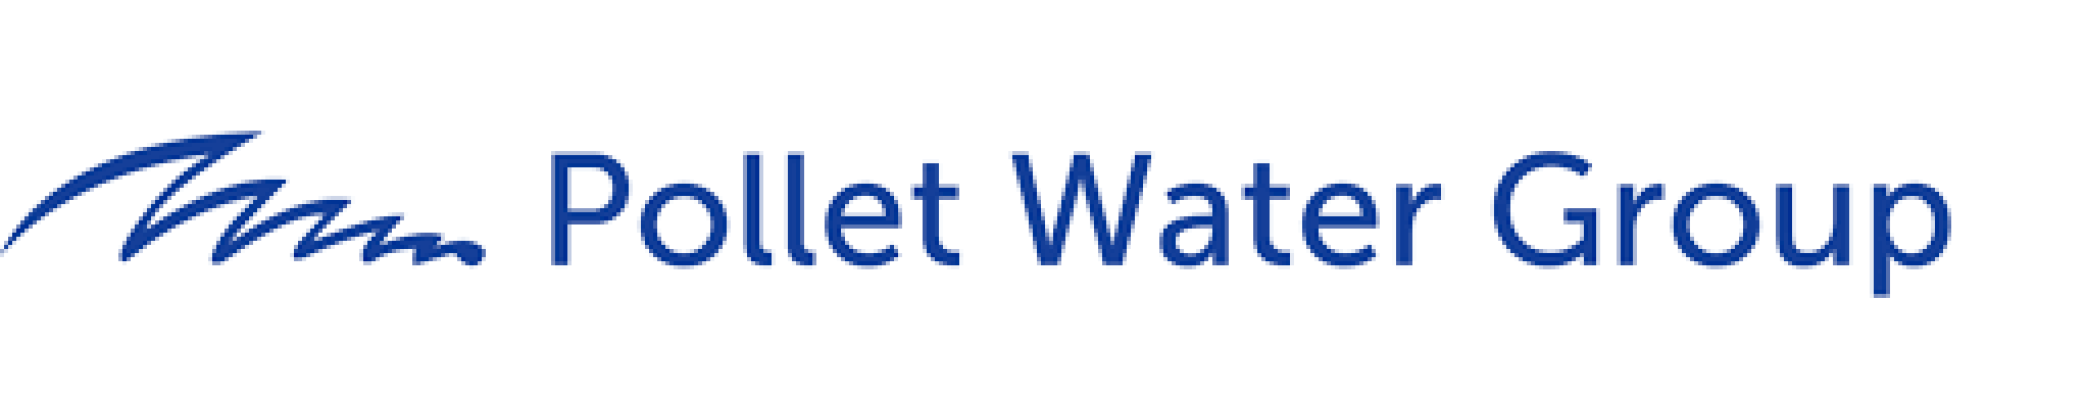 pollet water group logo